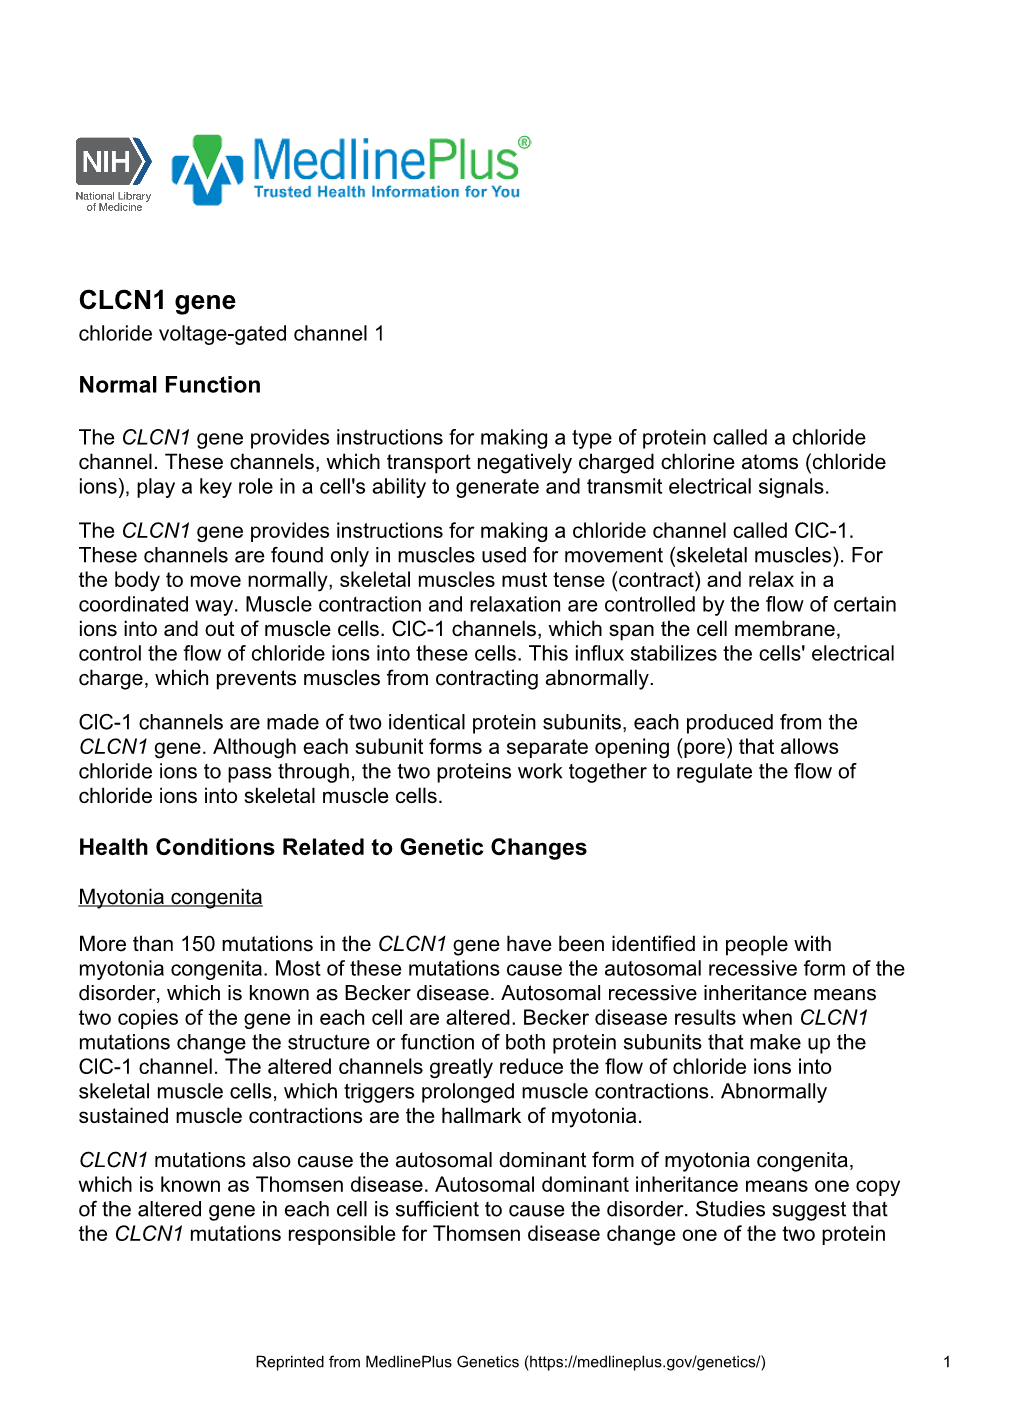 CLCN1 Gene Chloride Voltage-Gated Channel 1